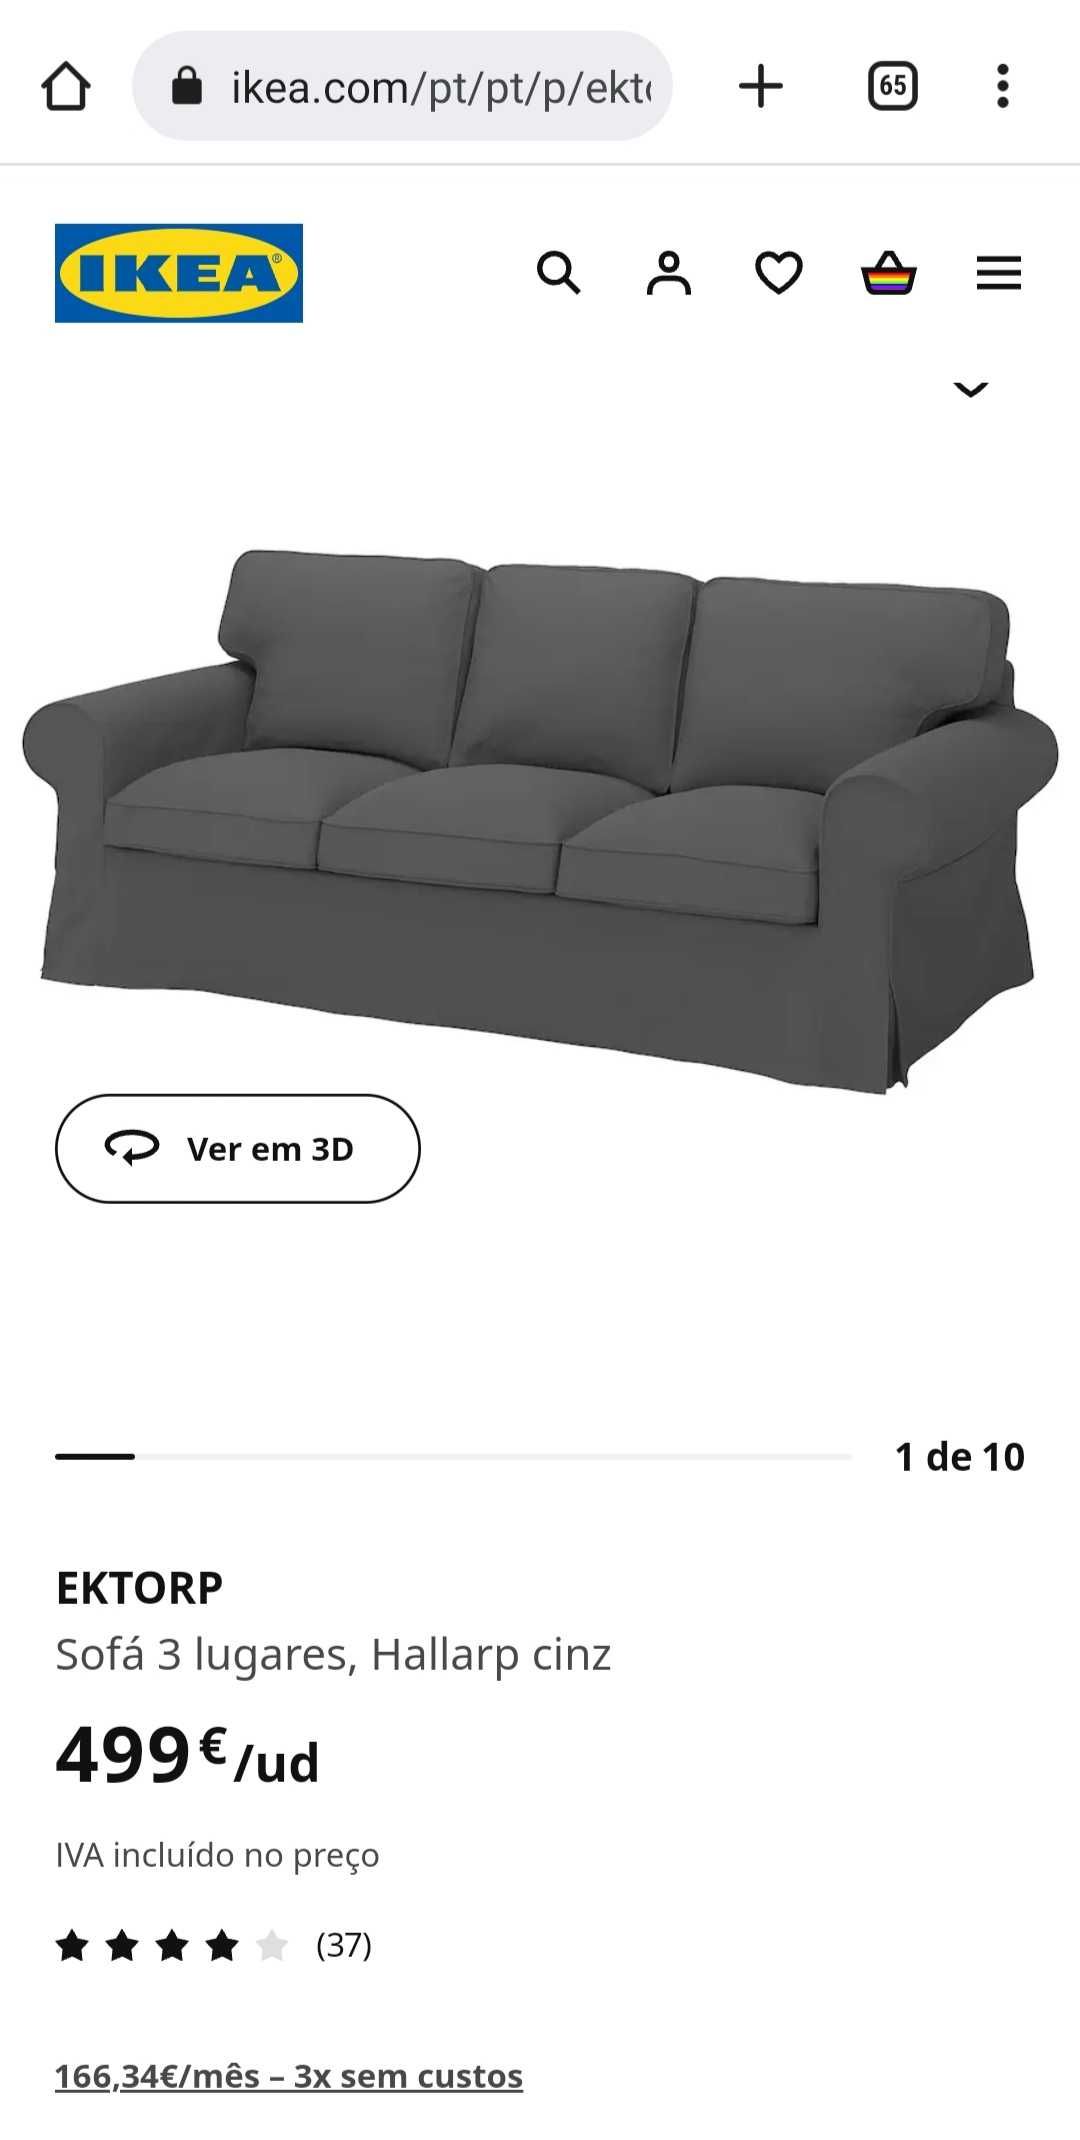 Sofá IKEA Ektorp